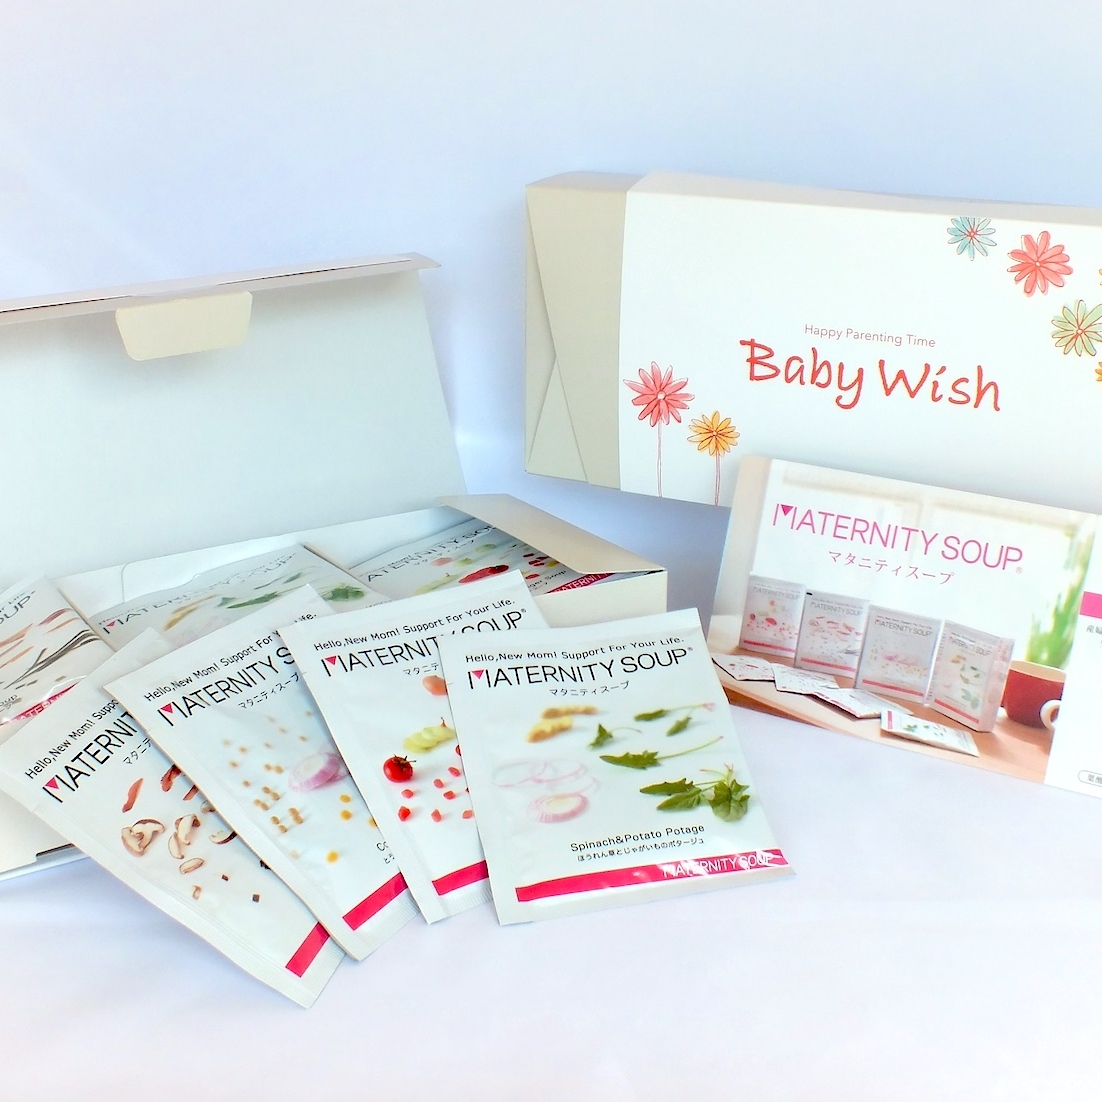 【Baby Wish】妊娠中のママとおなかの赤ちゃんへの贈りもの マタニティスープギフト14食セット(4種類アソート)